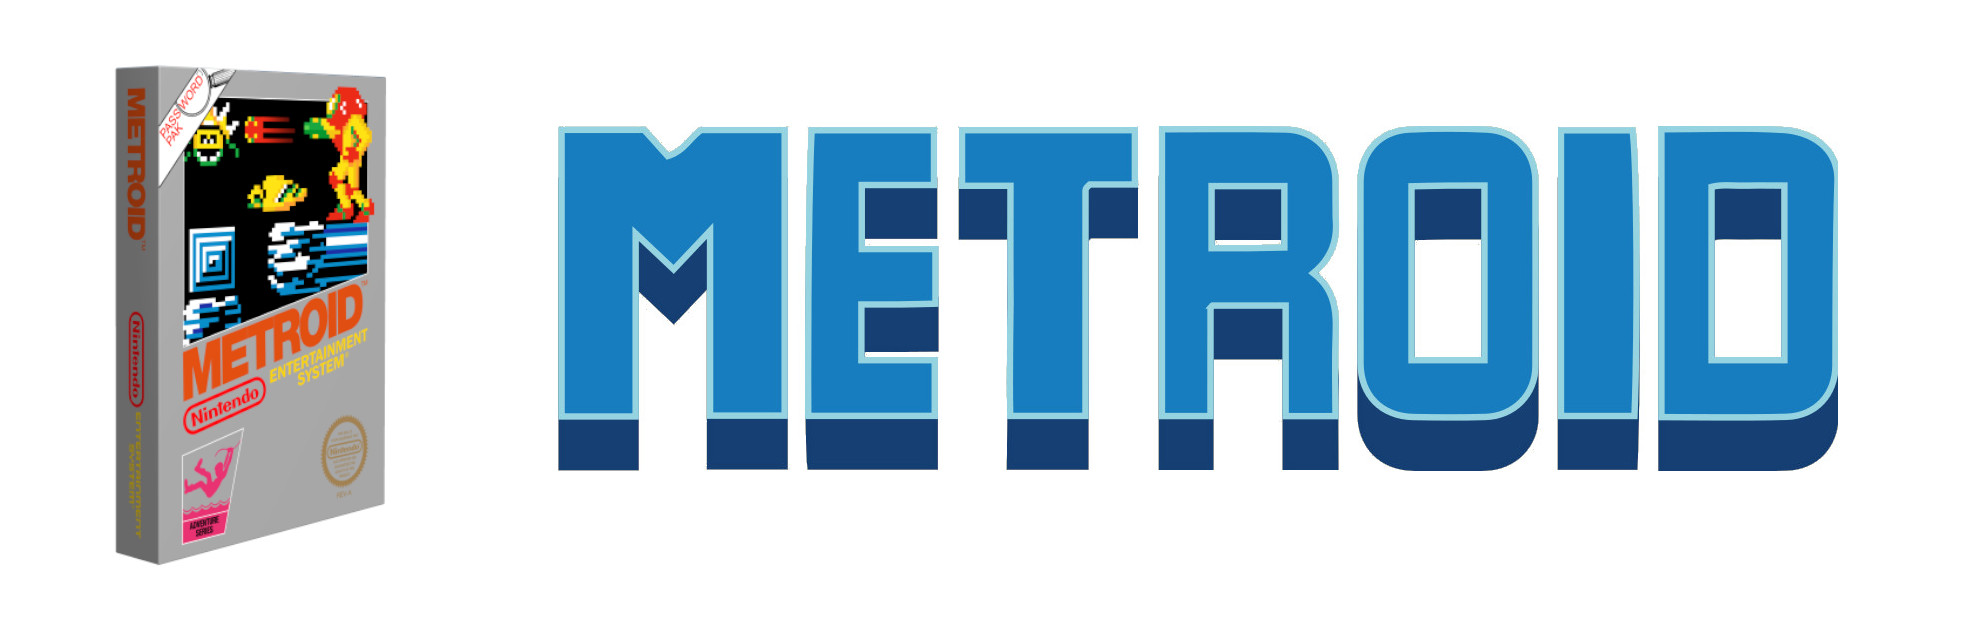 Metroid Metroid 2 Super Metroid